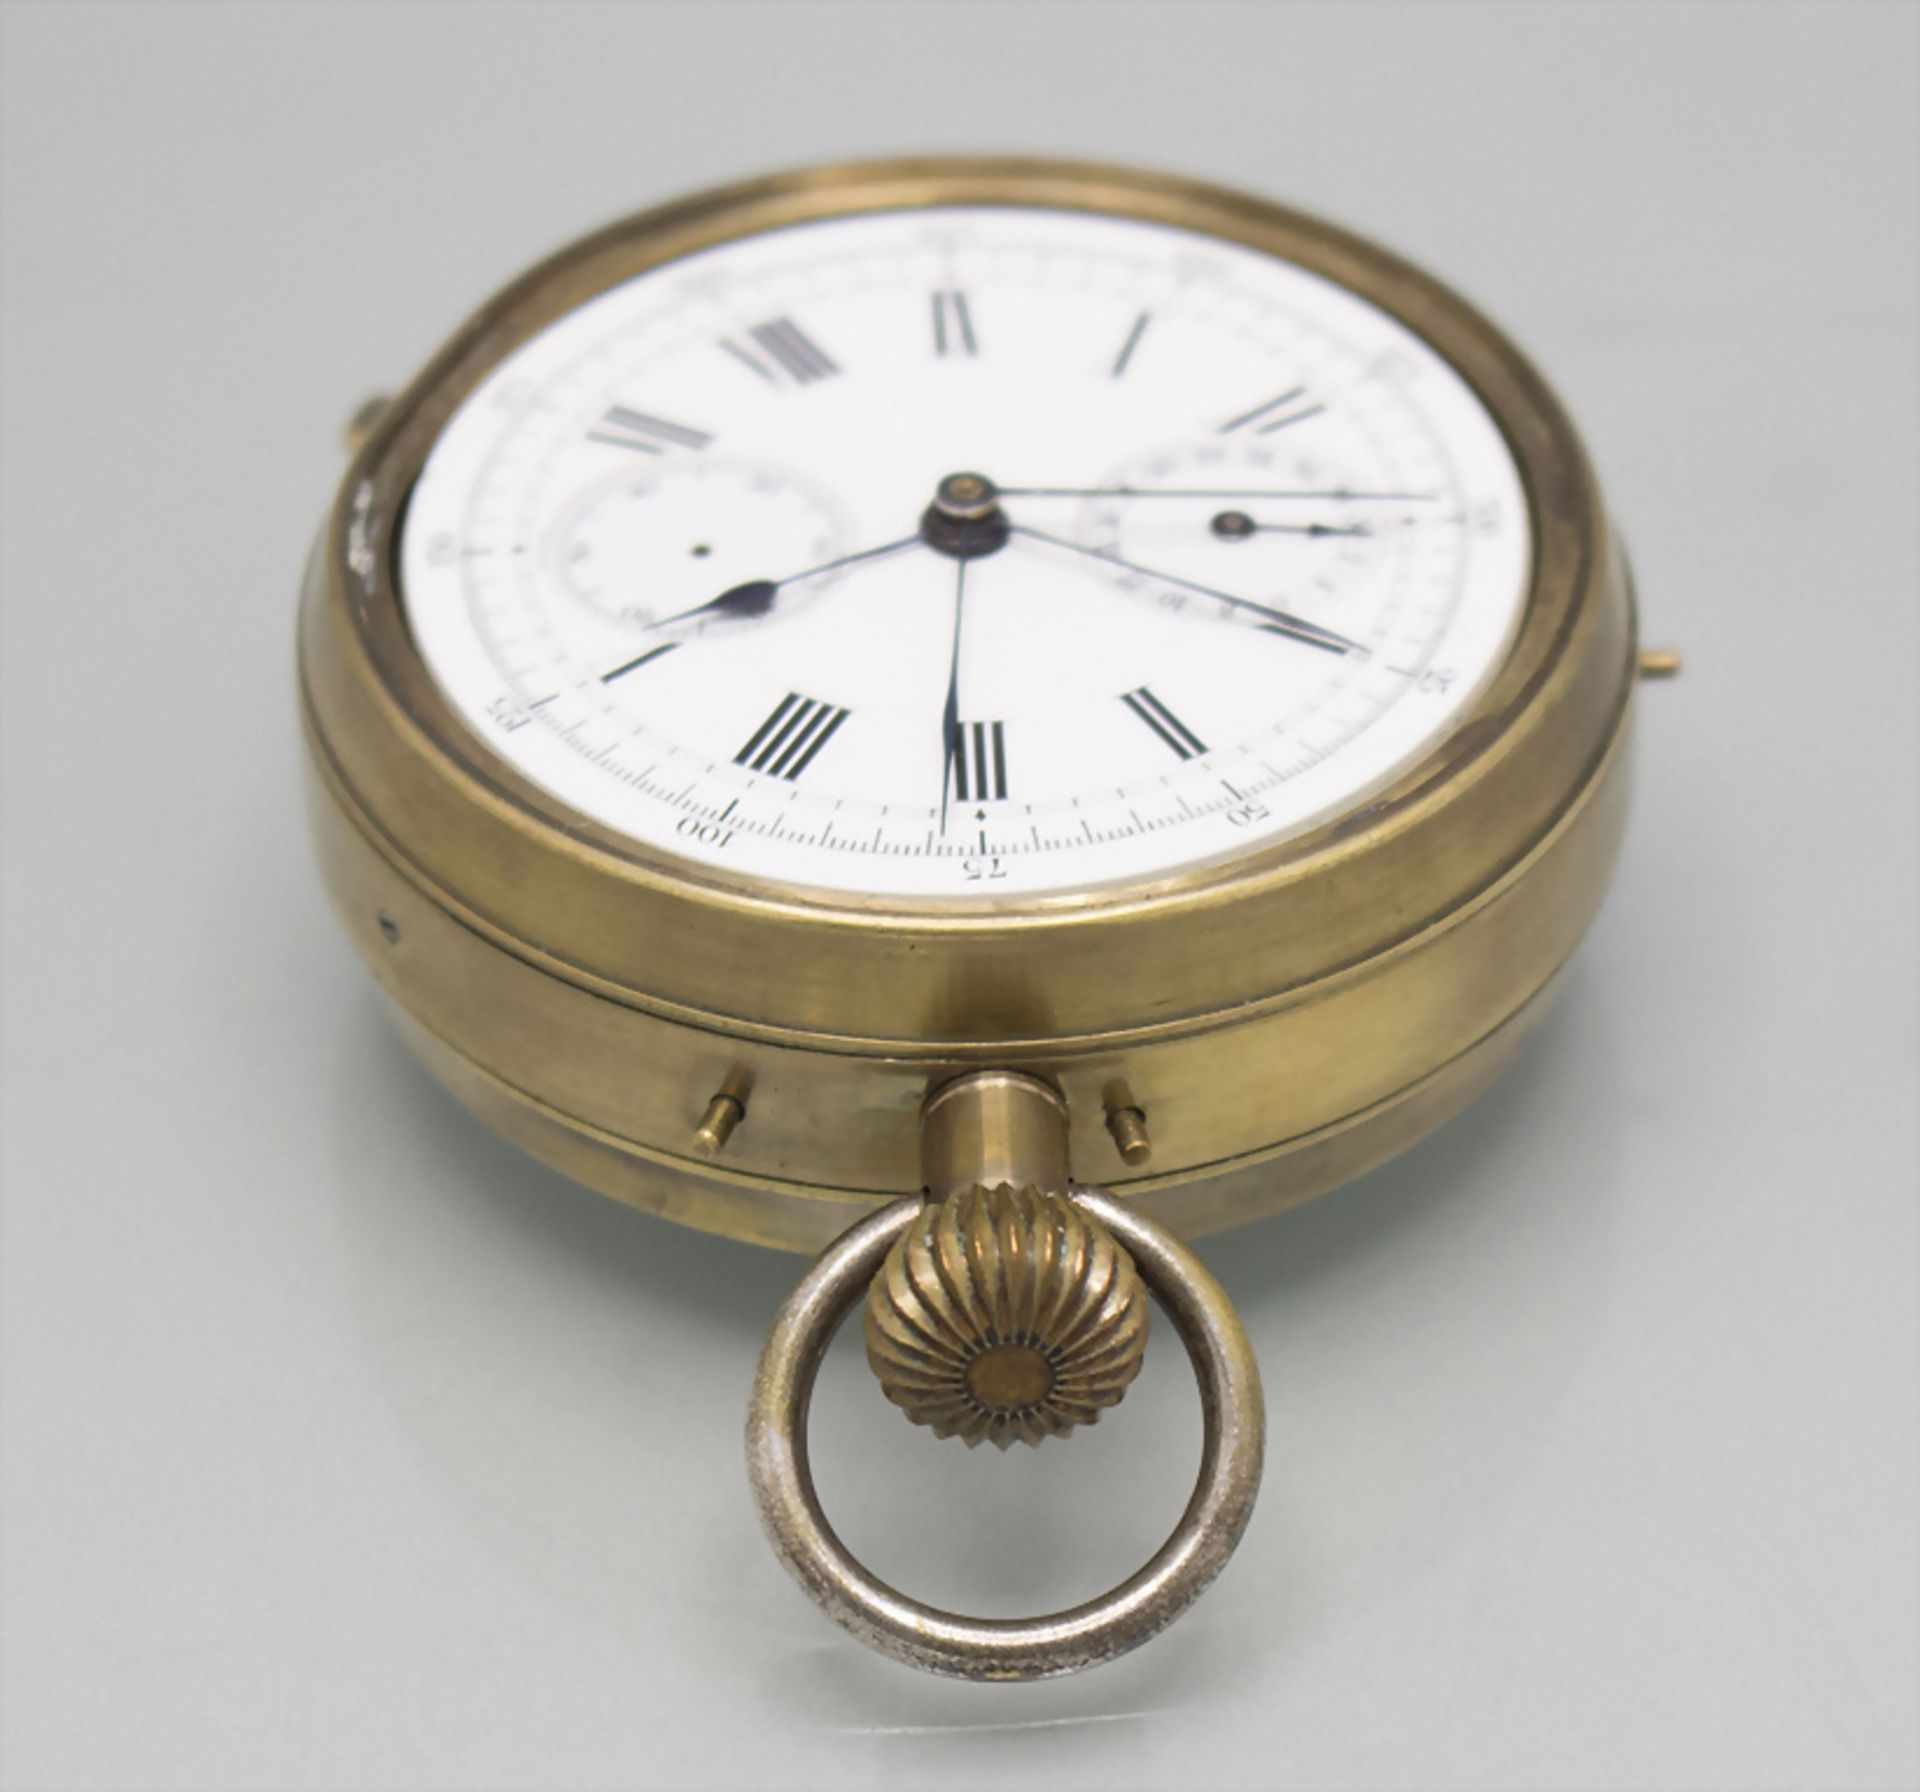 Taschenuhr, Rattrapante-Chronograph mit Minutenrepetition / A pocket watch, um 1900 - Image 3 of 5